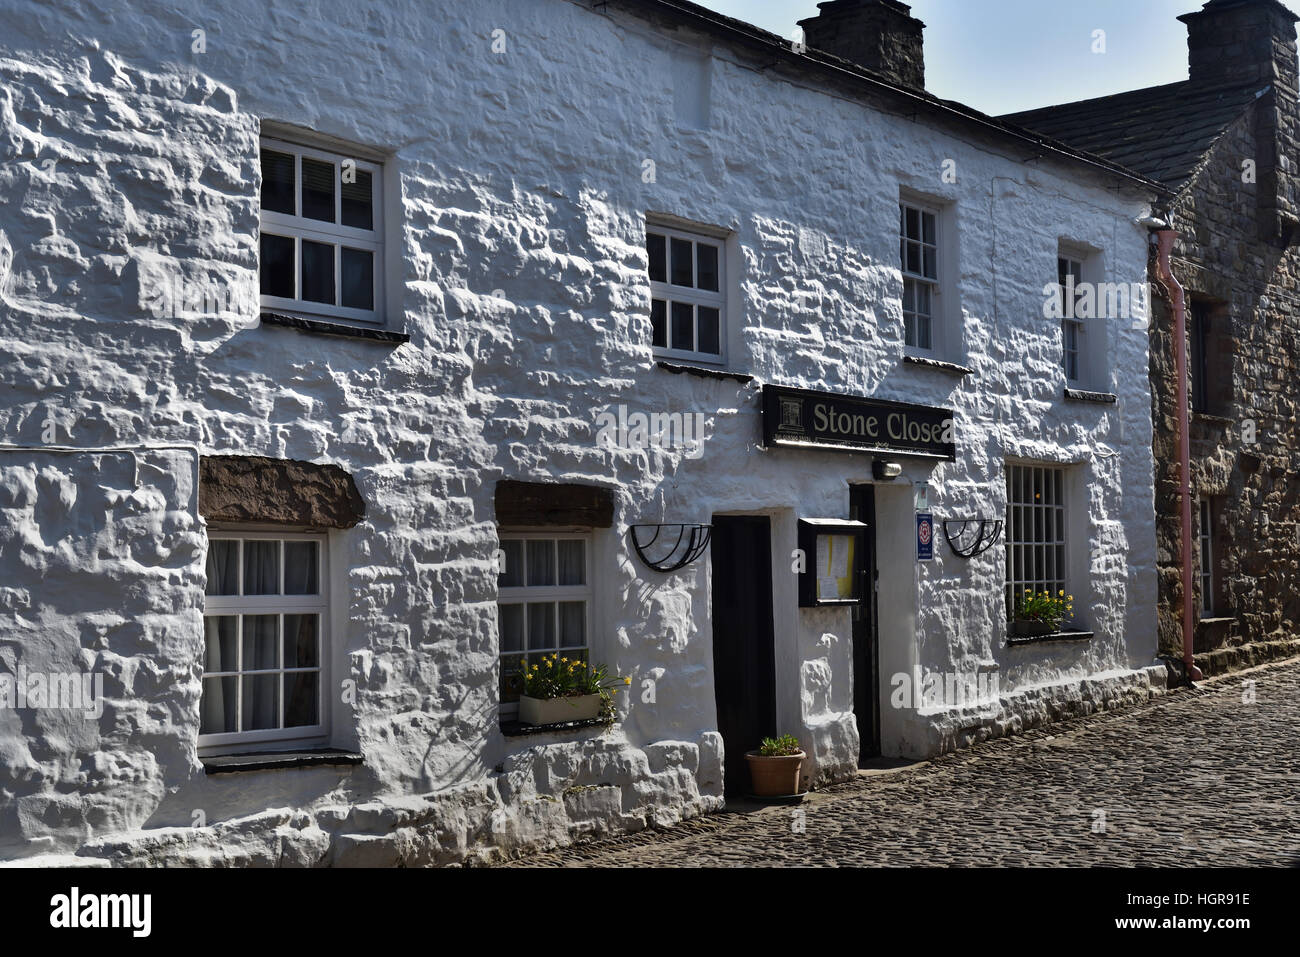 Stone Close, Tea Room & Guest House, Main Street, Dent village, Yorkshire Dales National Park, Cumbria, England, UK. Stock Photo